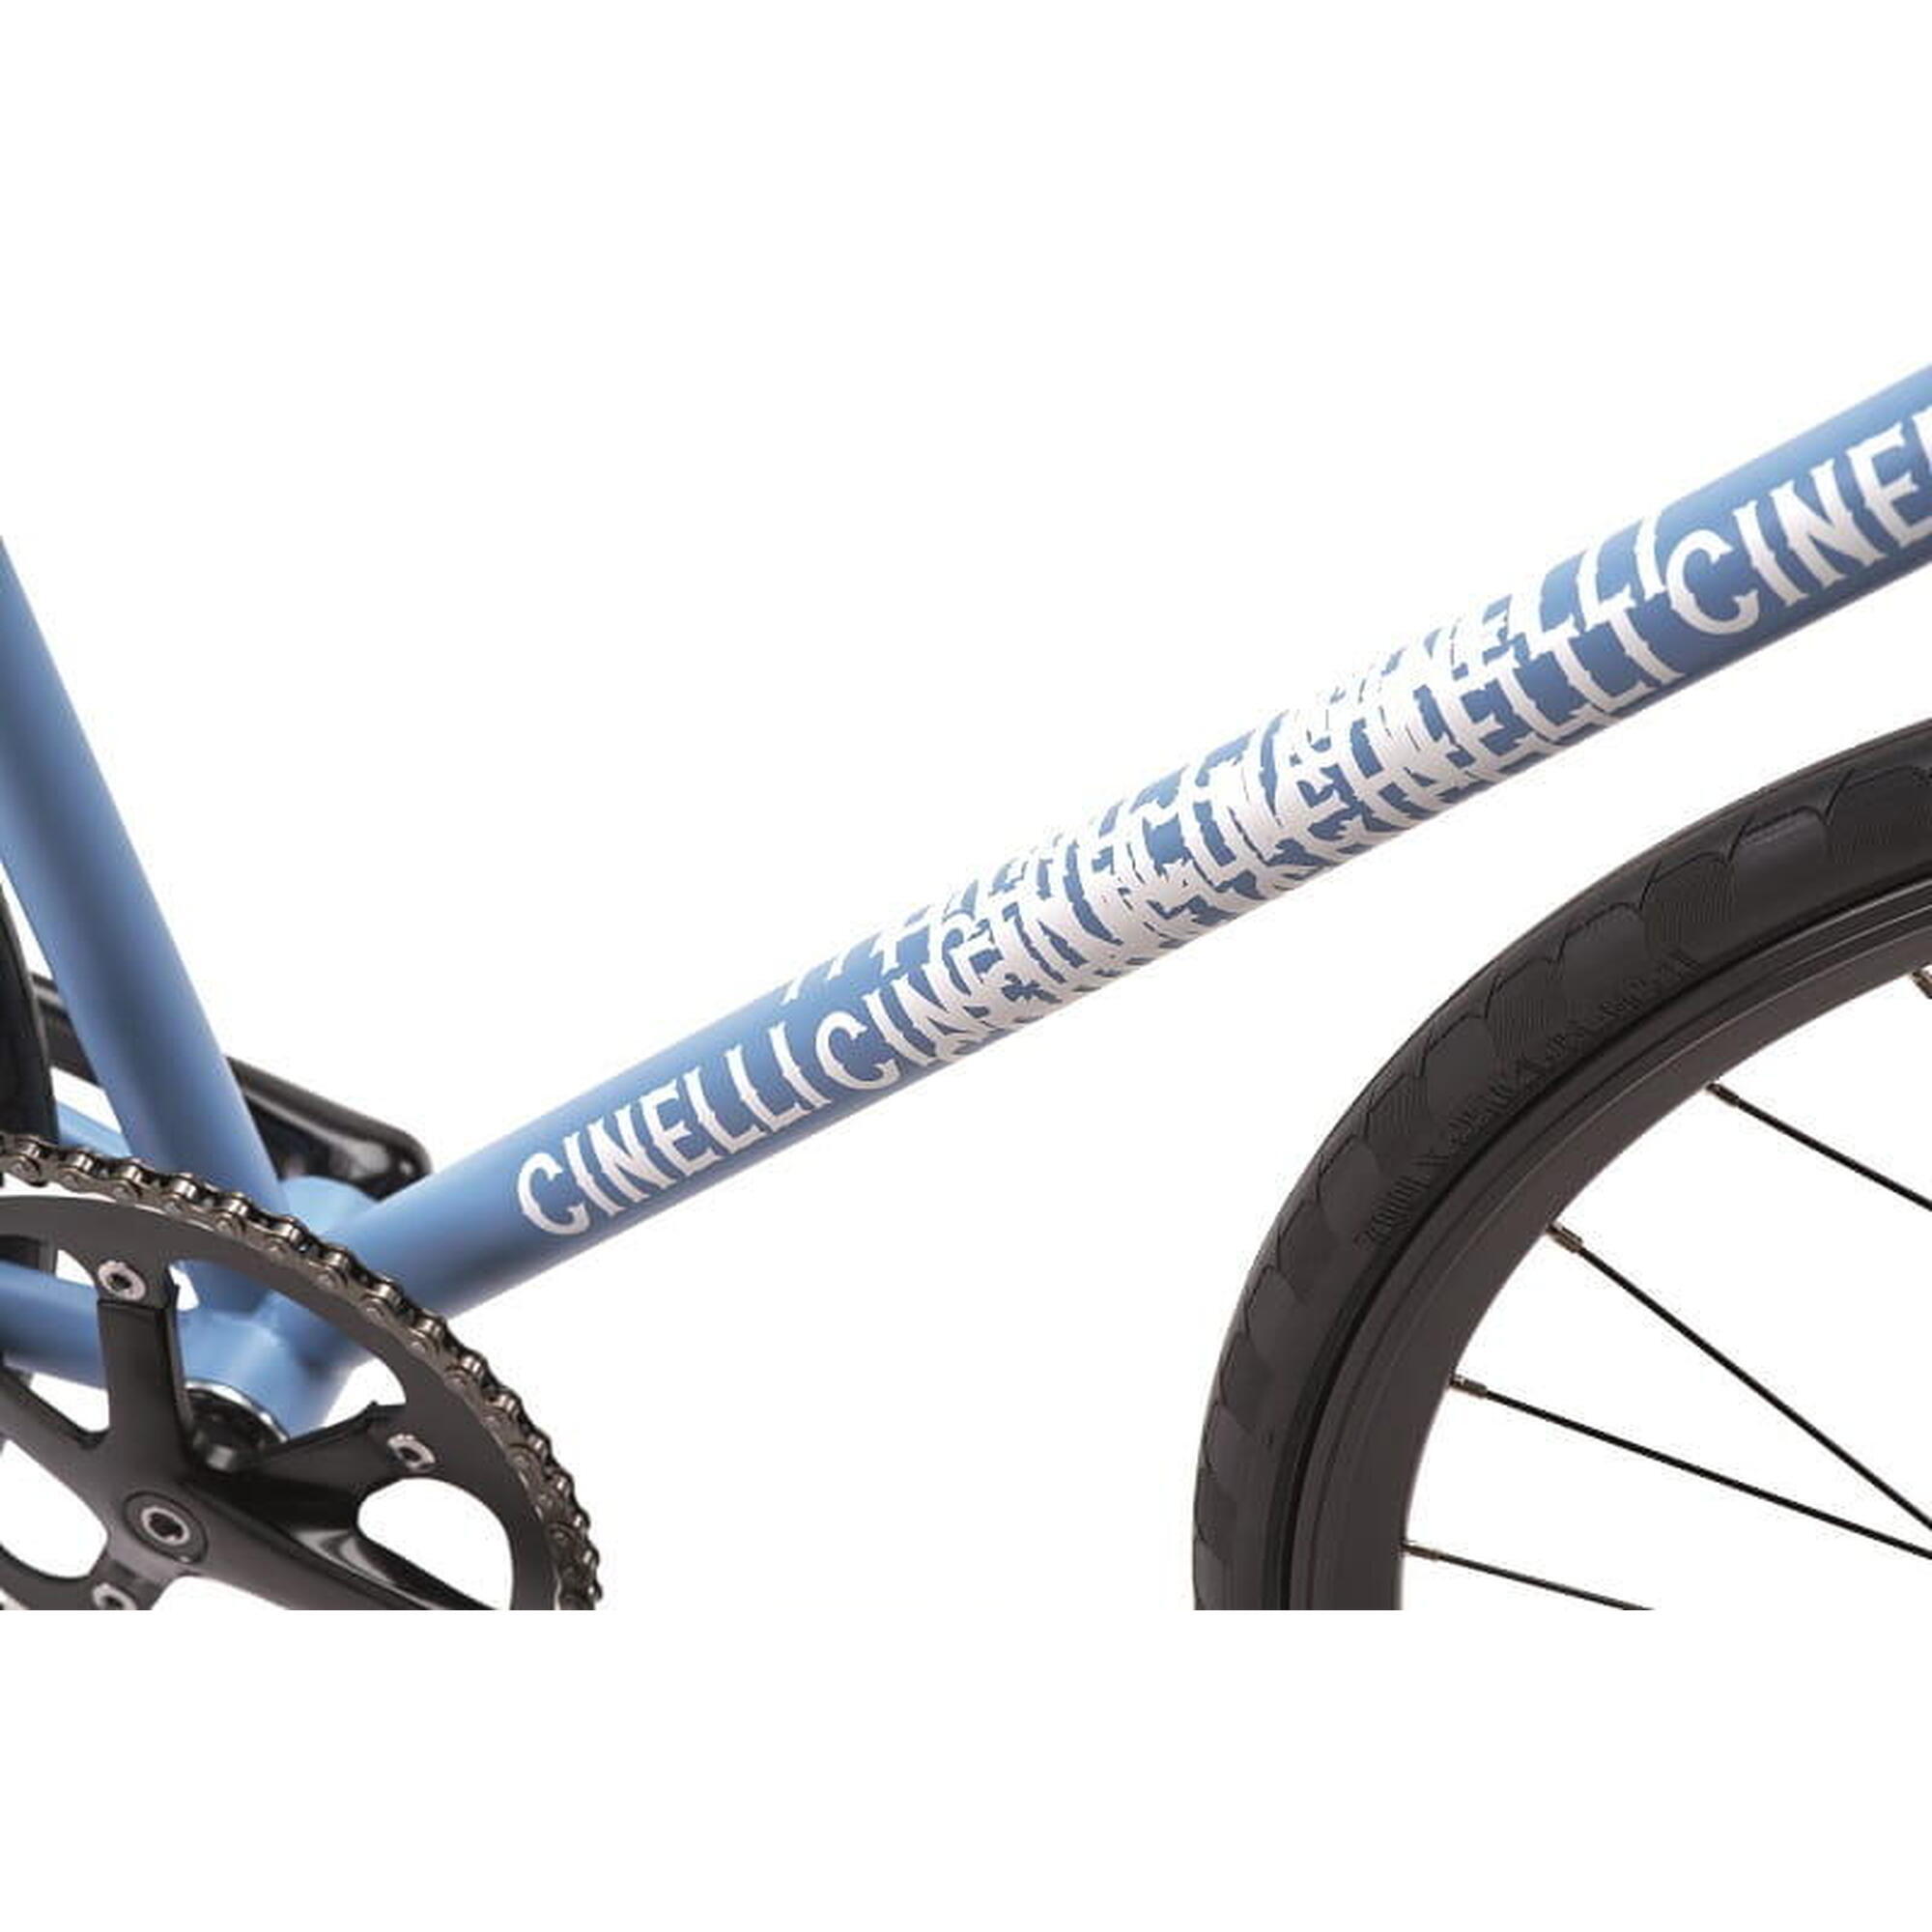 Bicicleta urbana Gazzetta Track - Blau